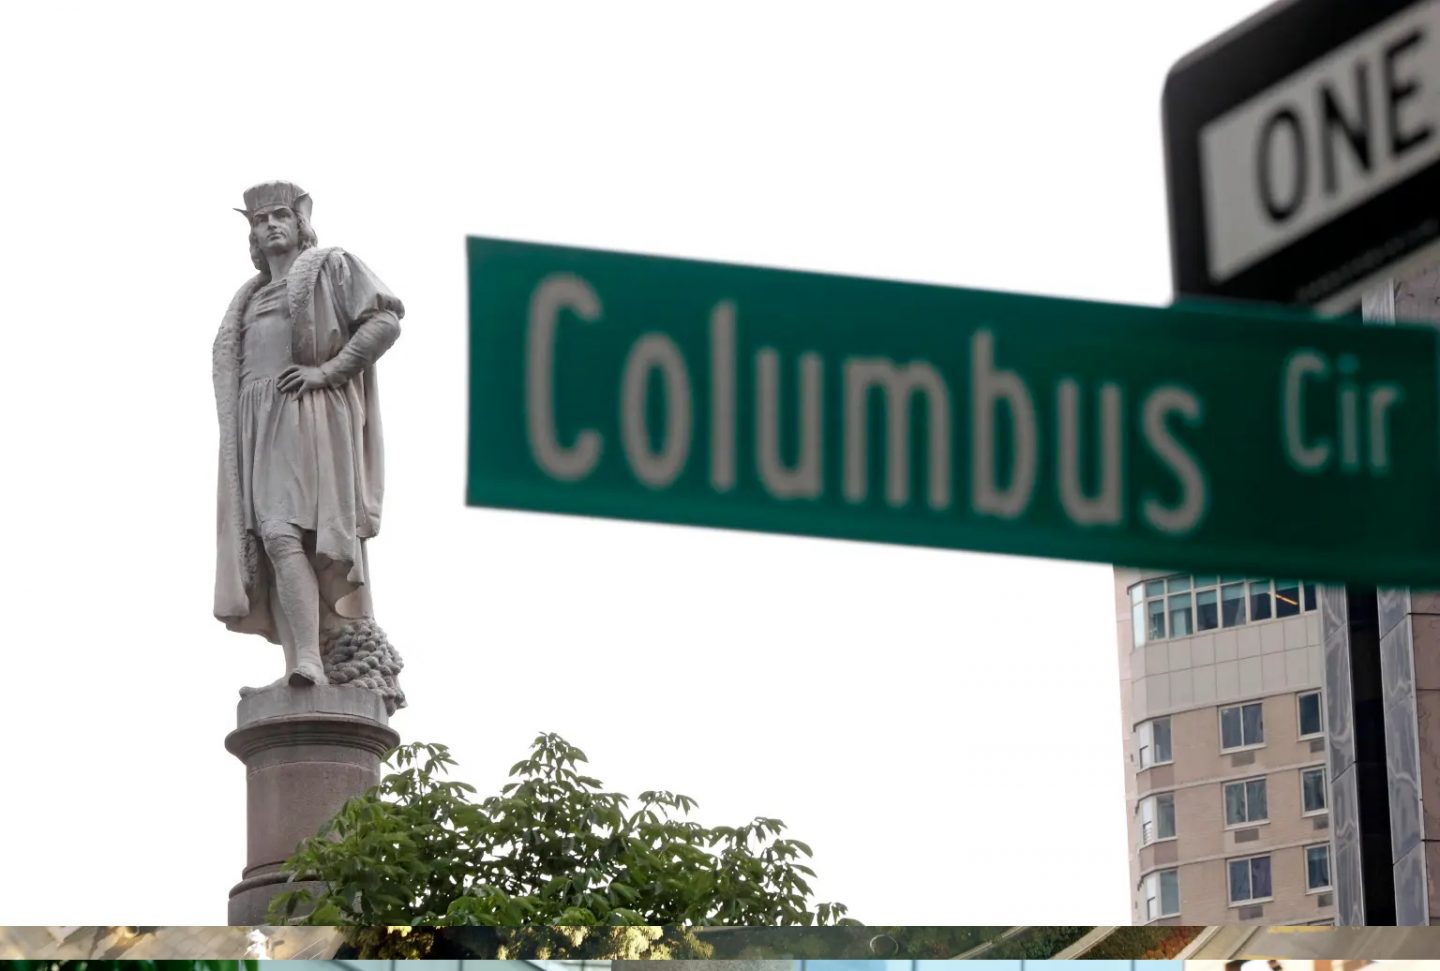 NYC Council advances bid that could yank monuments honoring Washington, Jefferson, Columbus